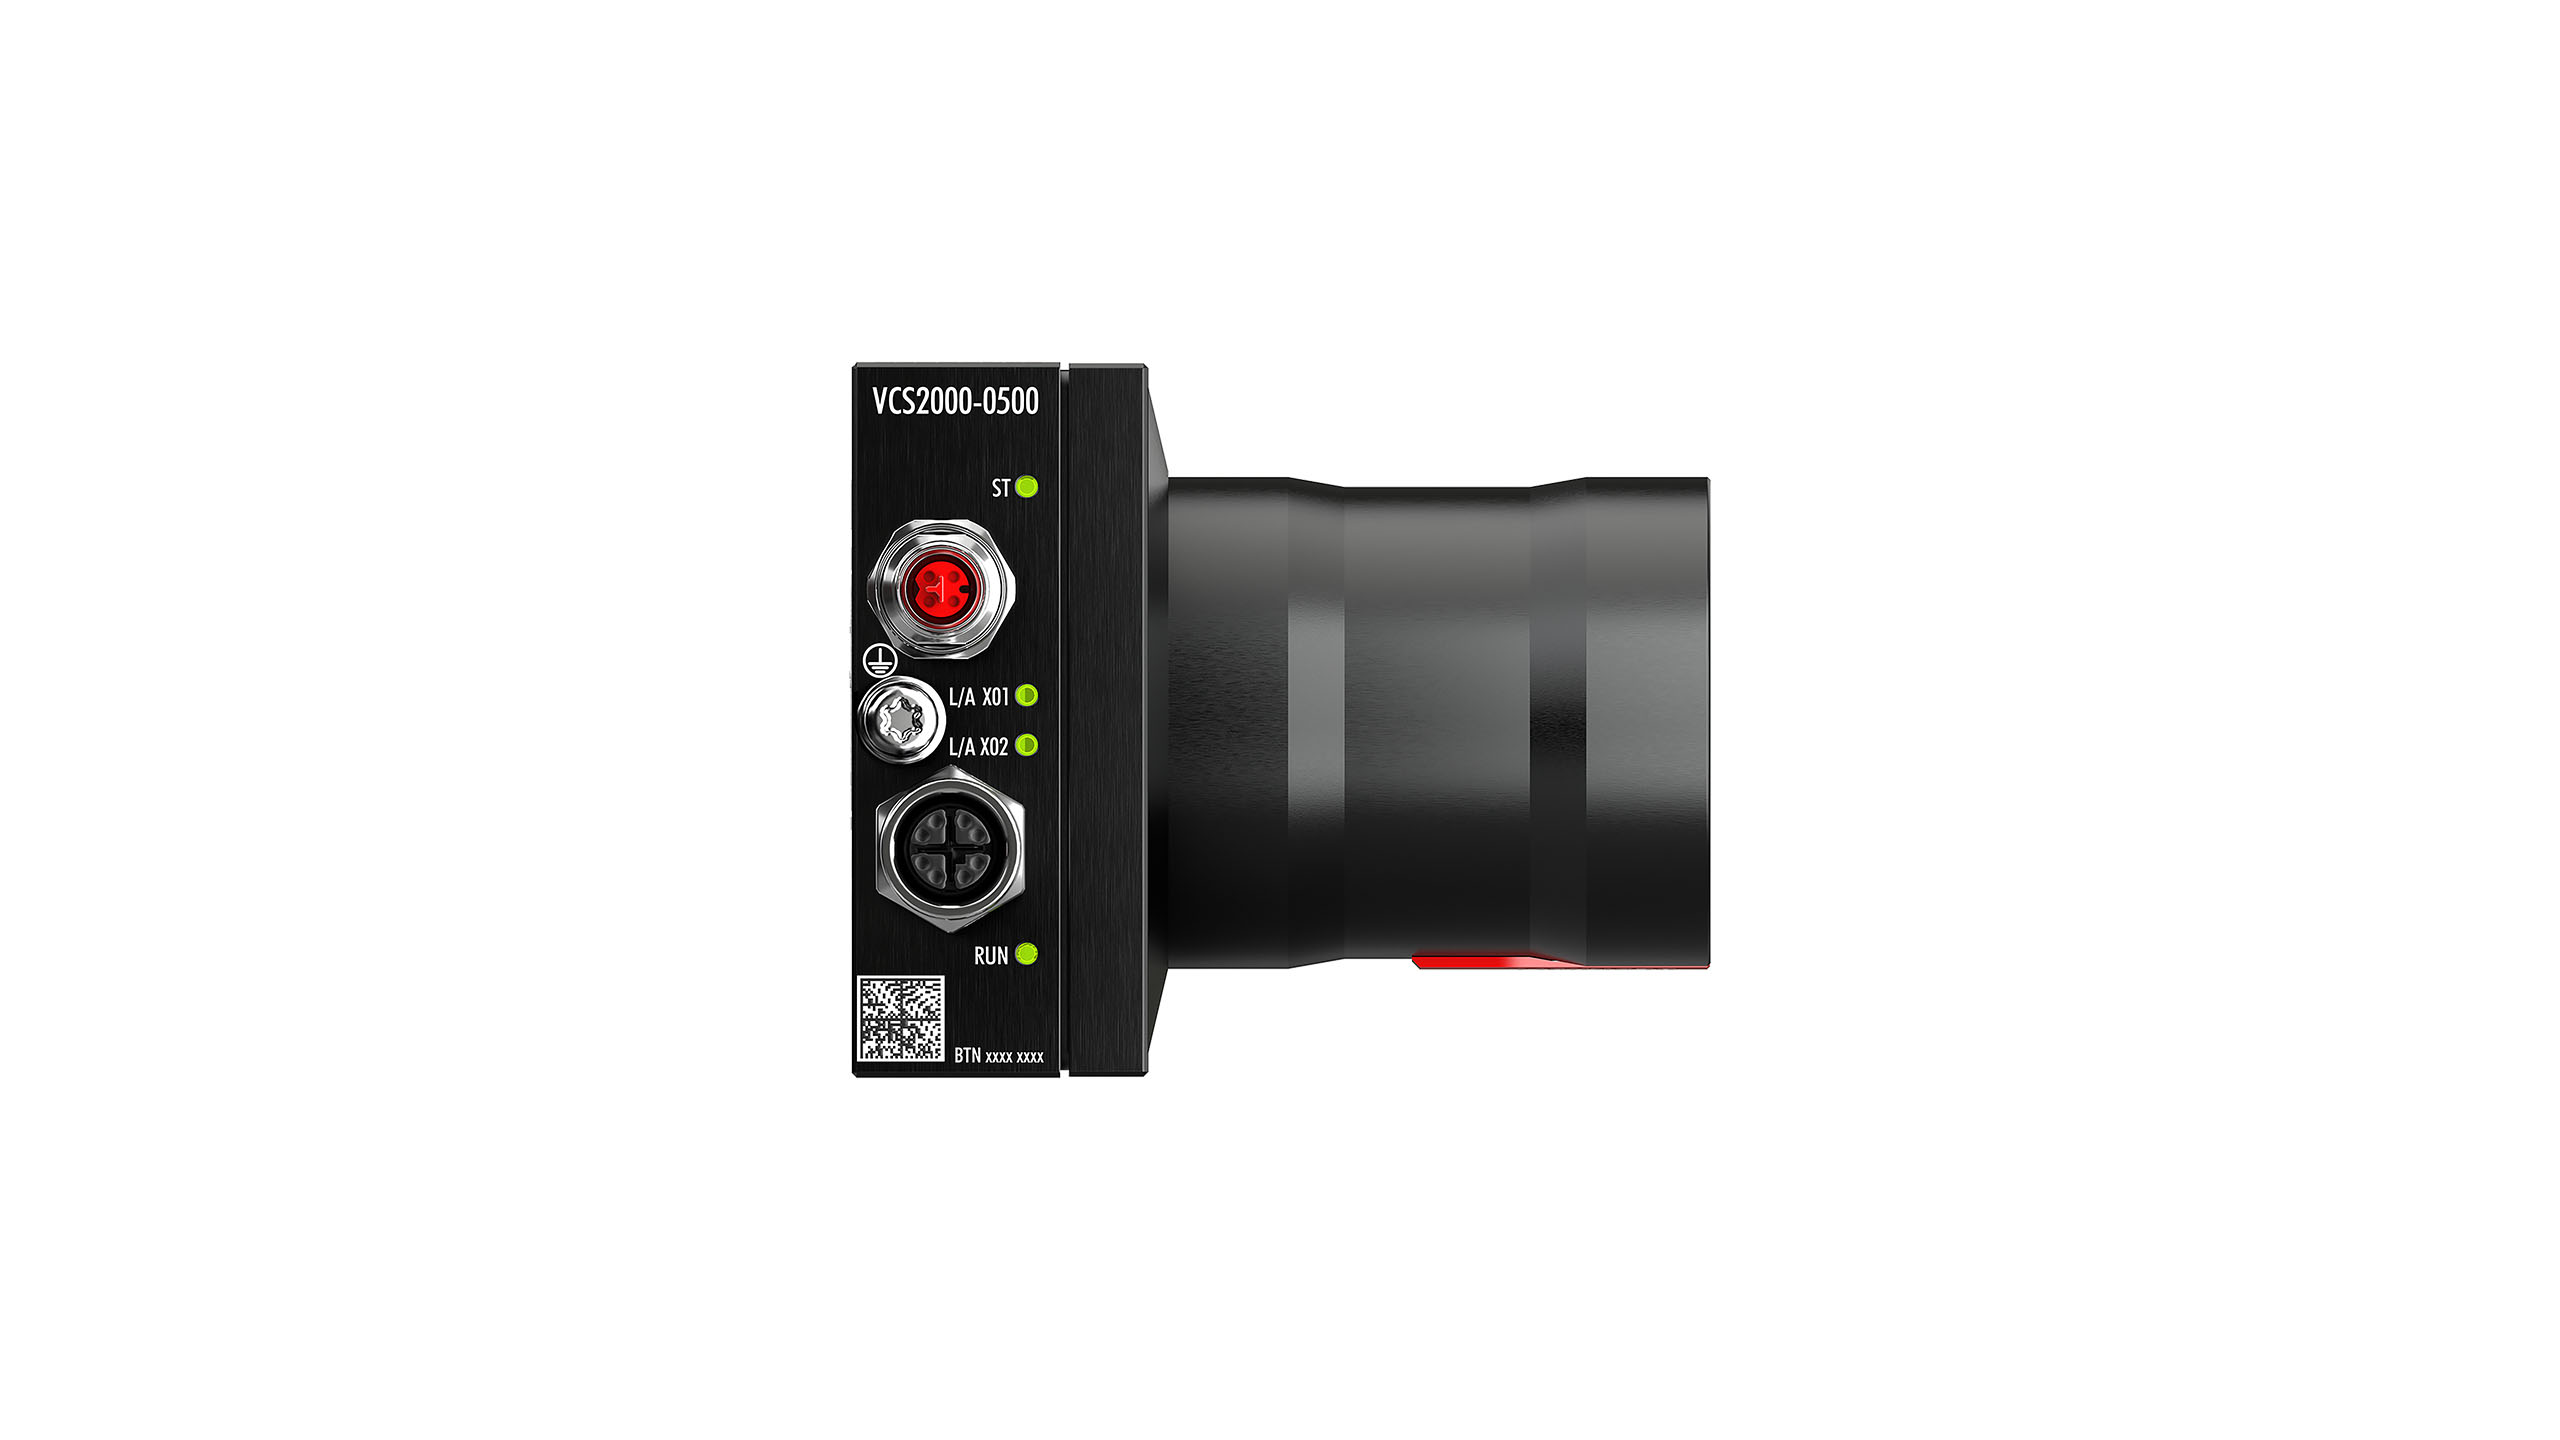 VCS2020-0500 | Area scan camera, 2.5 Gbit/s, Sony IMX567, monochrome, 5.1 MP